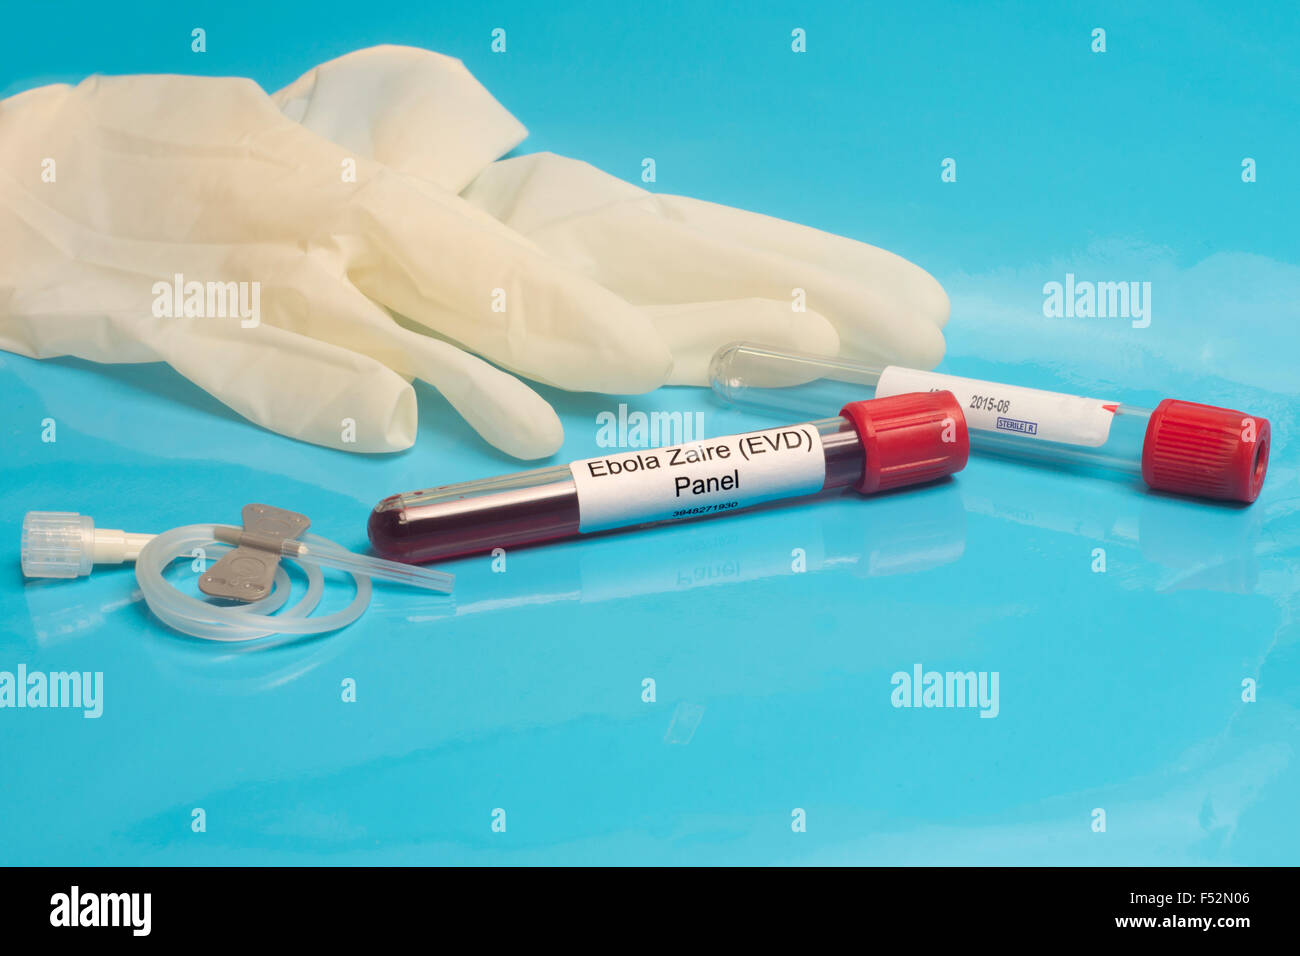 Ebola Zaire blood test panel lab sample